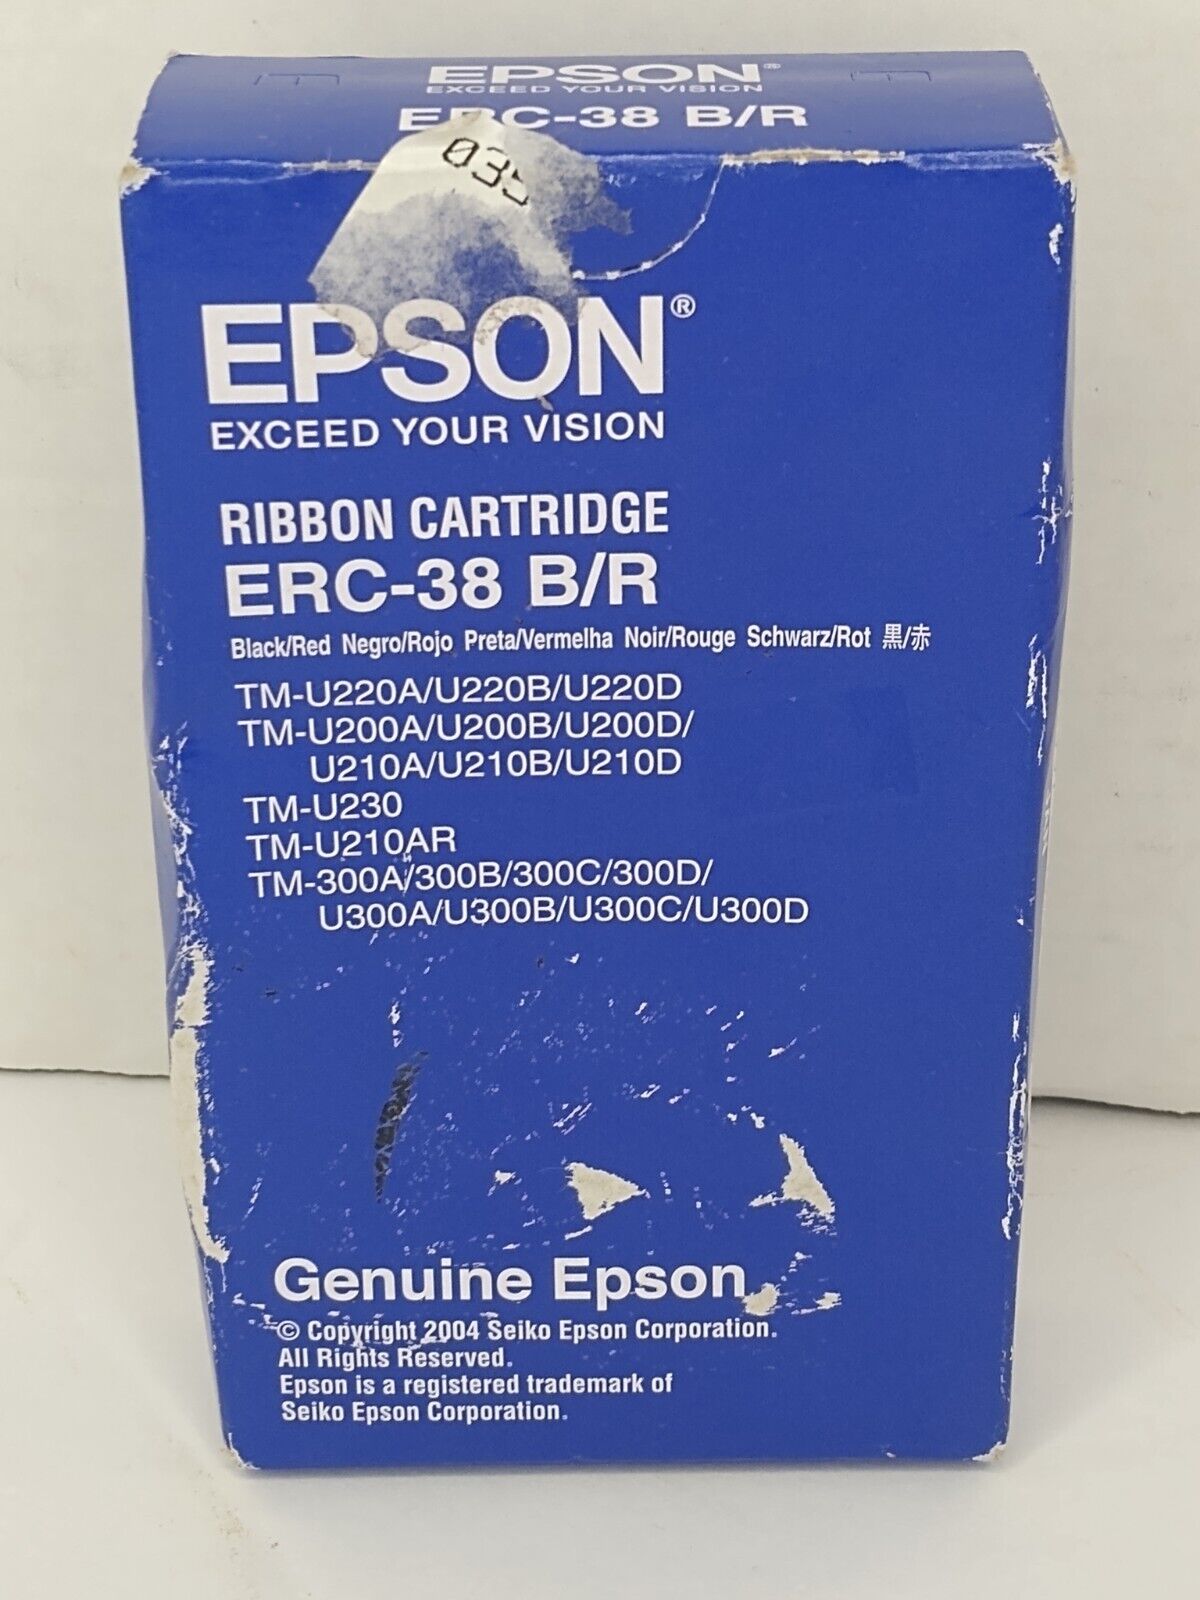 EPSON RIBBON CARTRIDGE #ERC-38 B/R - BLACK & RED - INK CARTRIDGE - Sealed